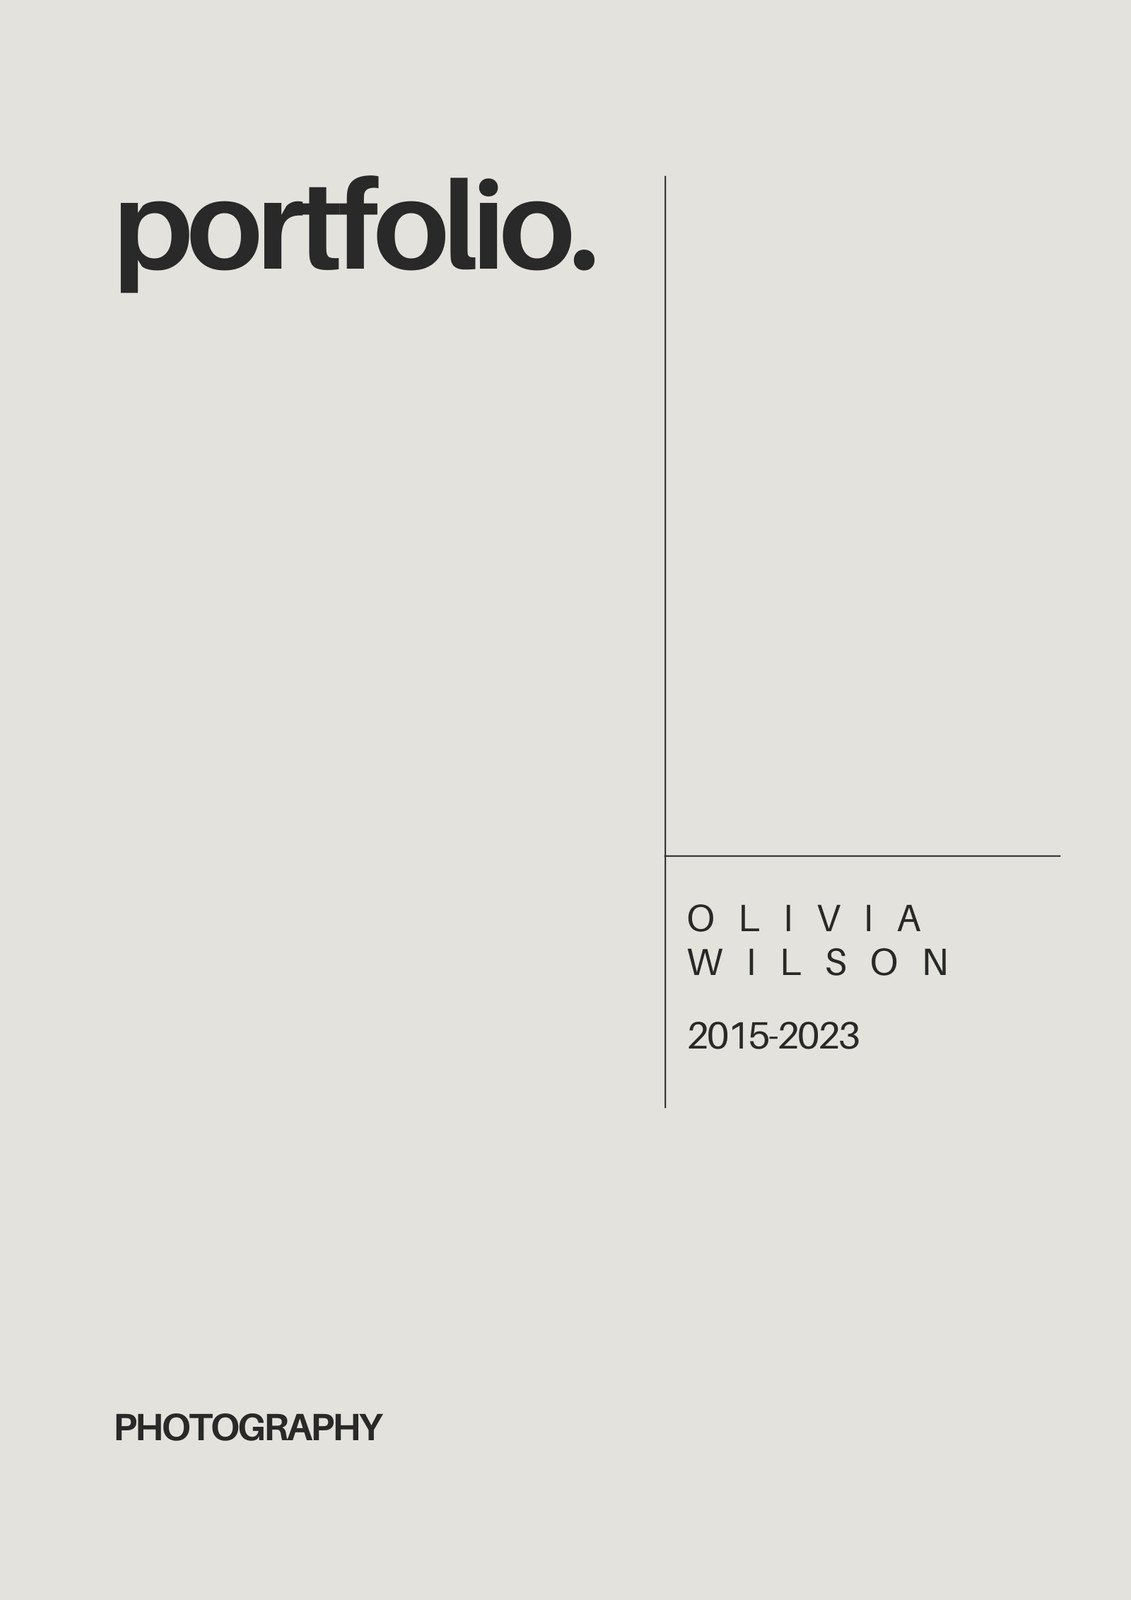 architecture portfolio cover page examples